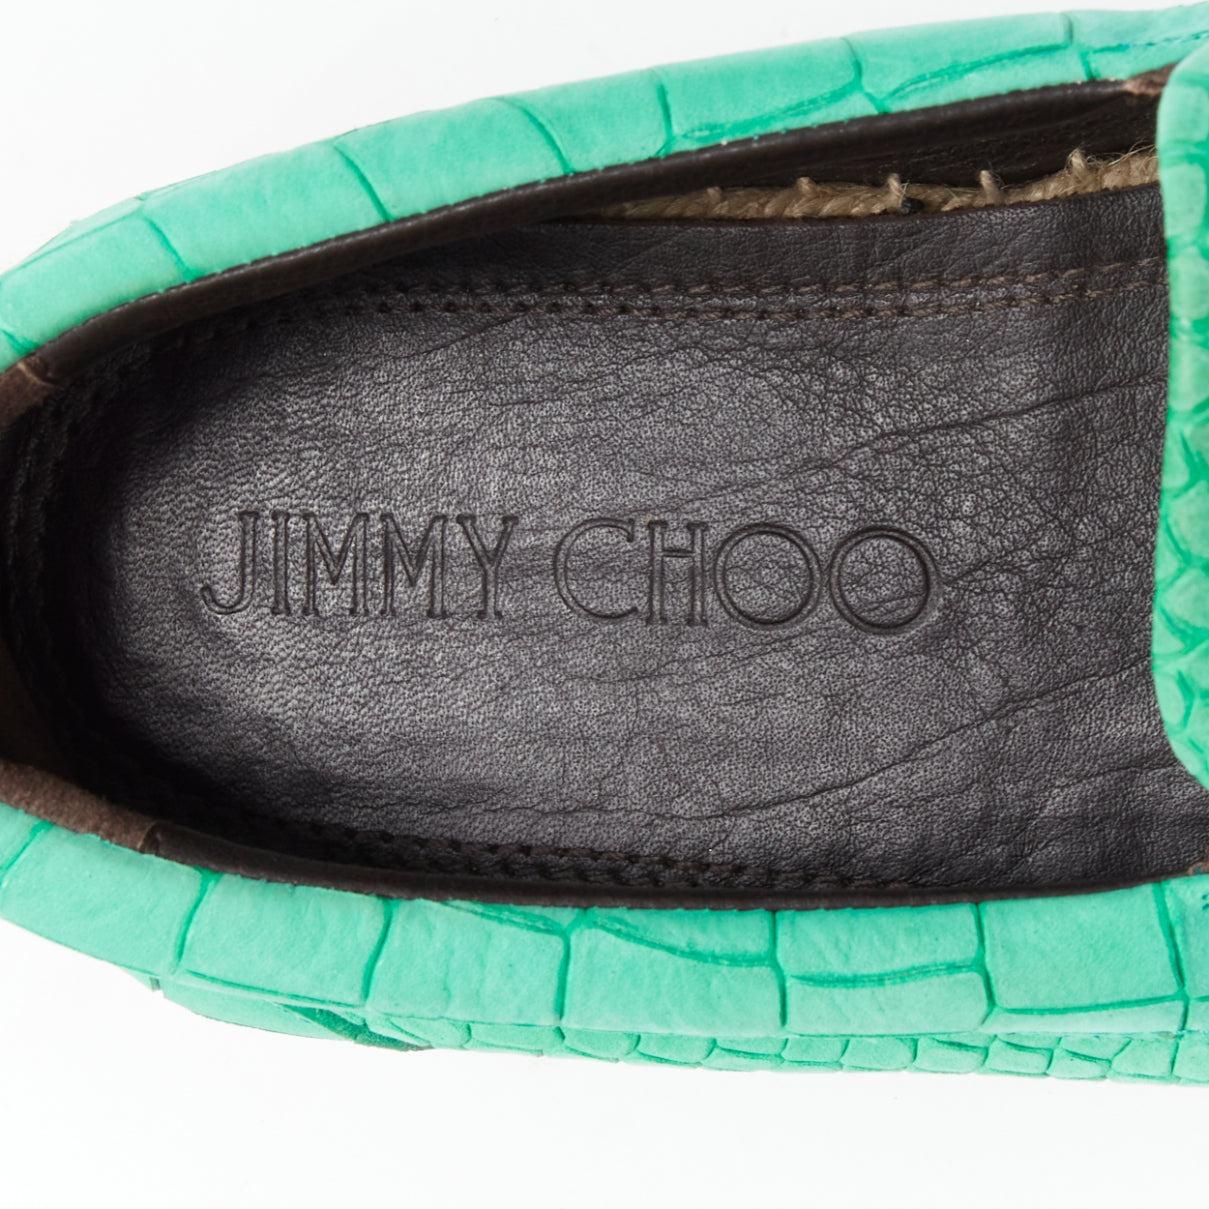 JIMMY CHOO Vlad mint green embossed scaled leather espadrilles EU42 For Sale 4